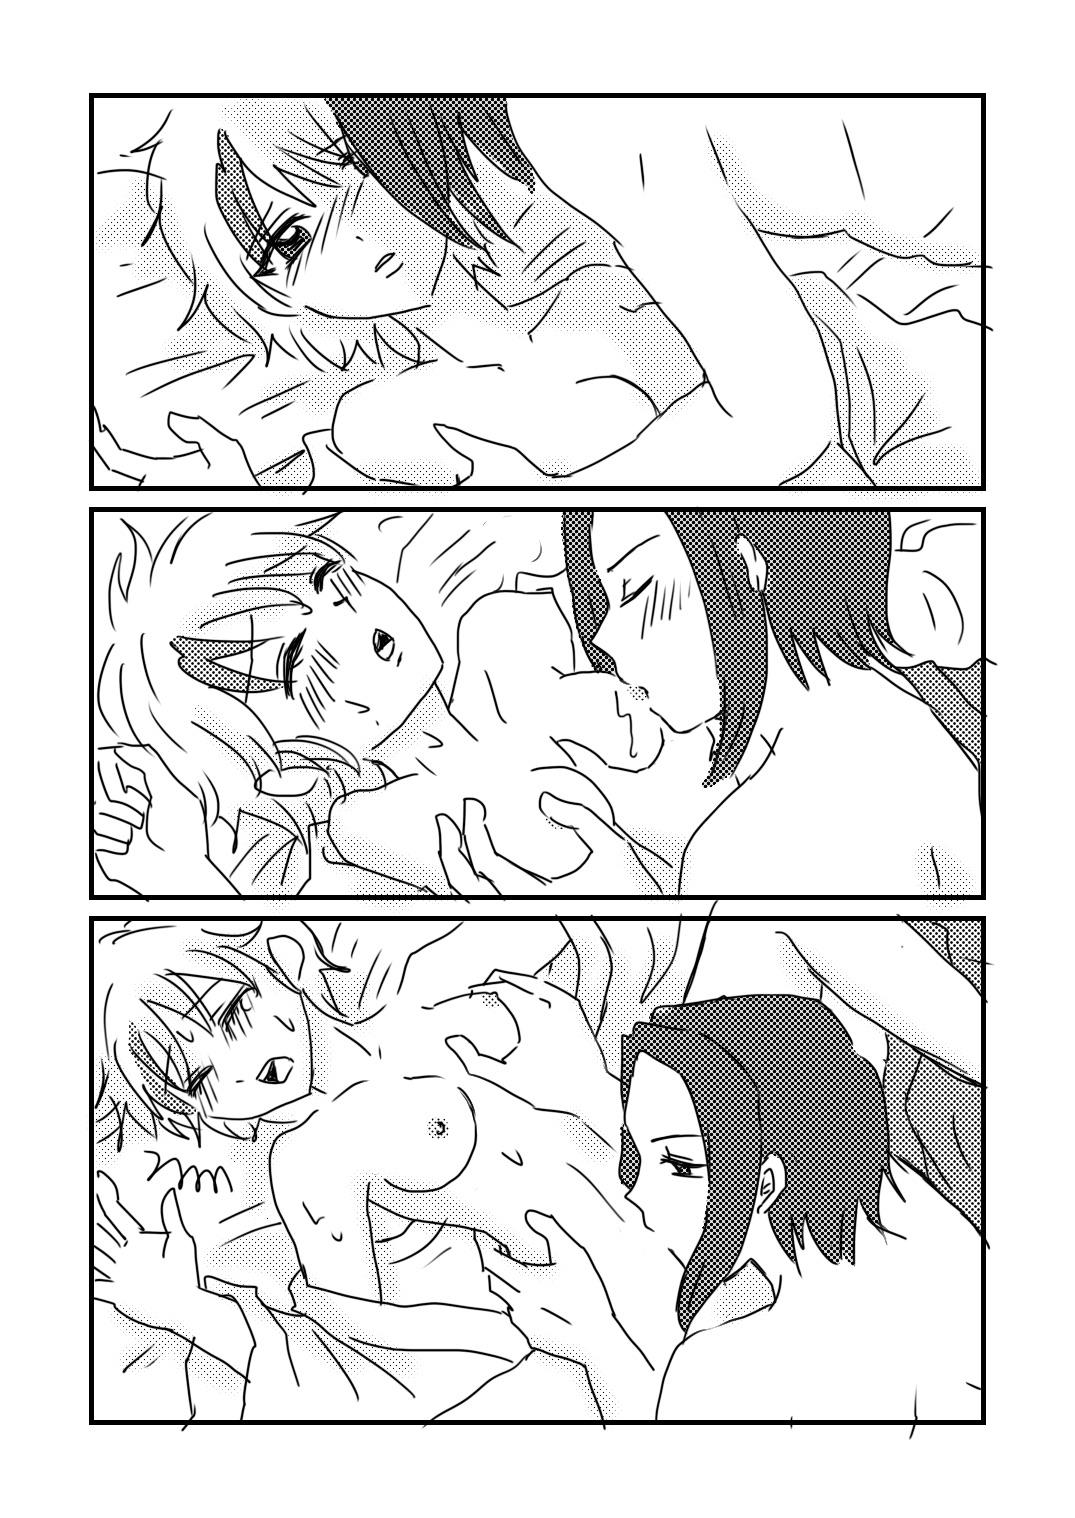 Licking Subete o kimi ni. - Inuyasha Sapphicerotica - Page 4